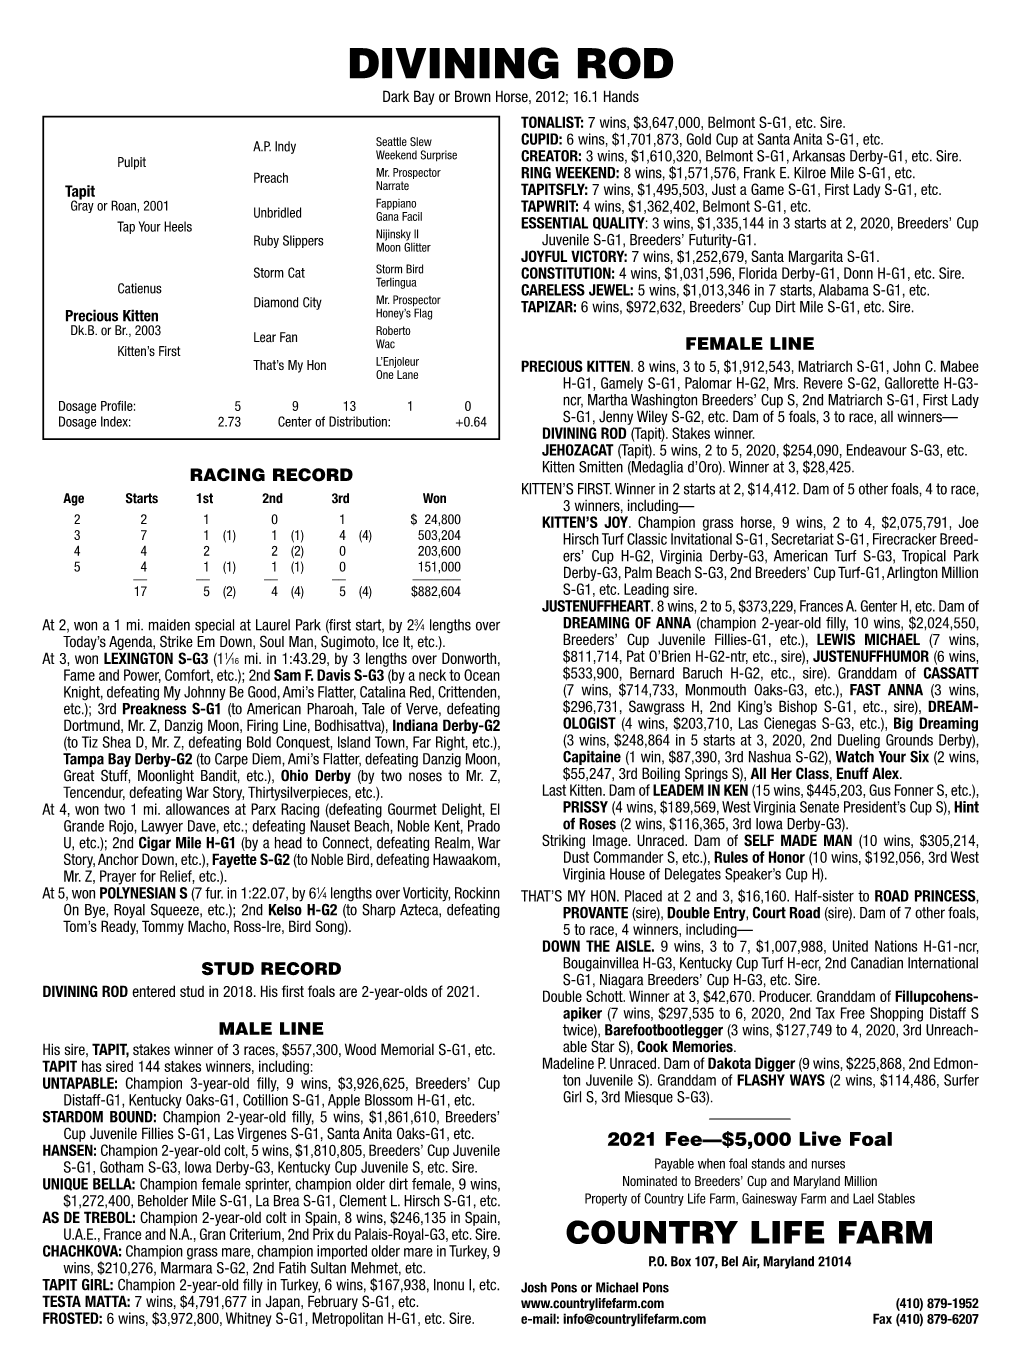 DIVINING ROD Dark Bay Or Brown Horse, 2012; 16.1 Hands TONALIST: 7 Wins, $3,647,000, Belmont S-G1, Etc